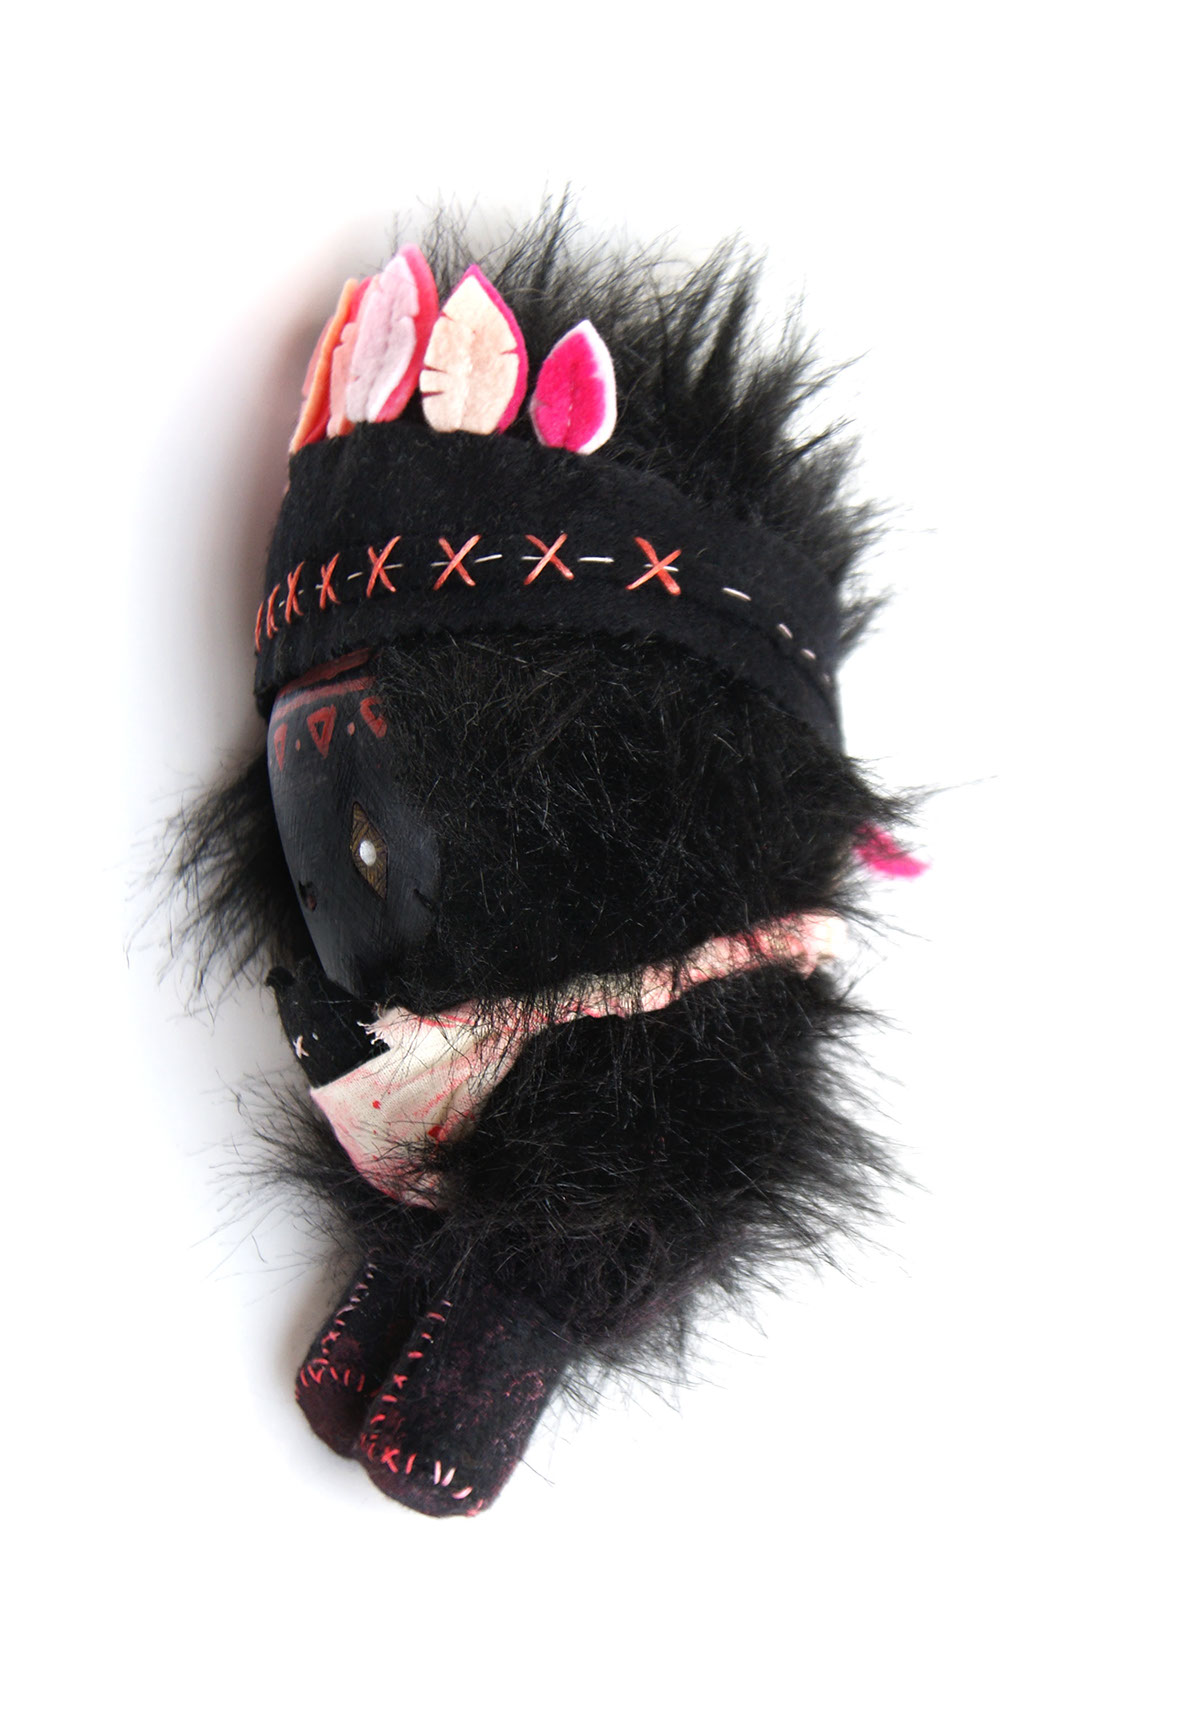 Viatgeler tribe tribe tribe toy tribe plush toy plume toy tribal toy penacho toy penacho plush song for wolves plush